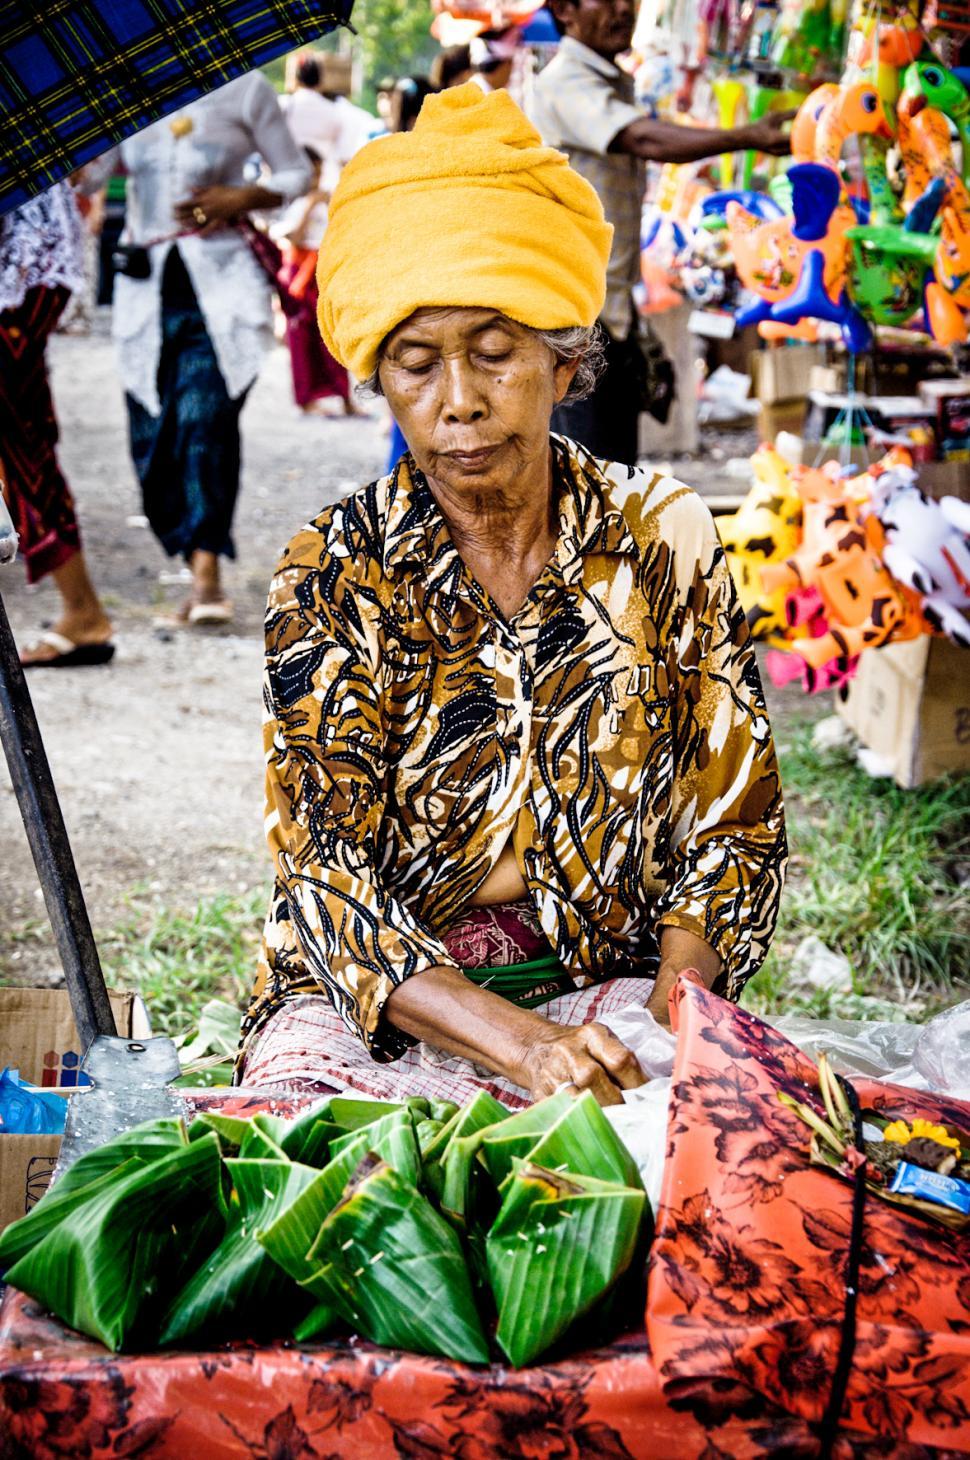 Free Image of street vendor selling food on the street 